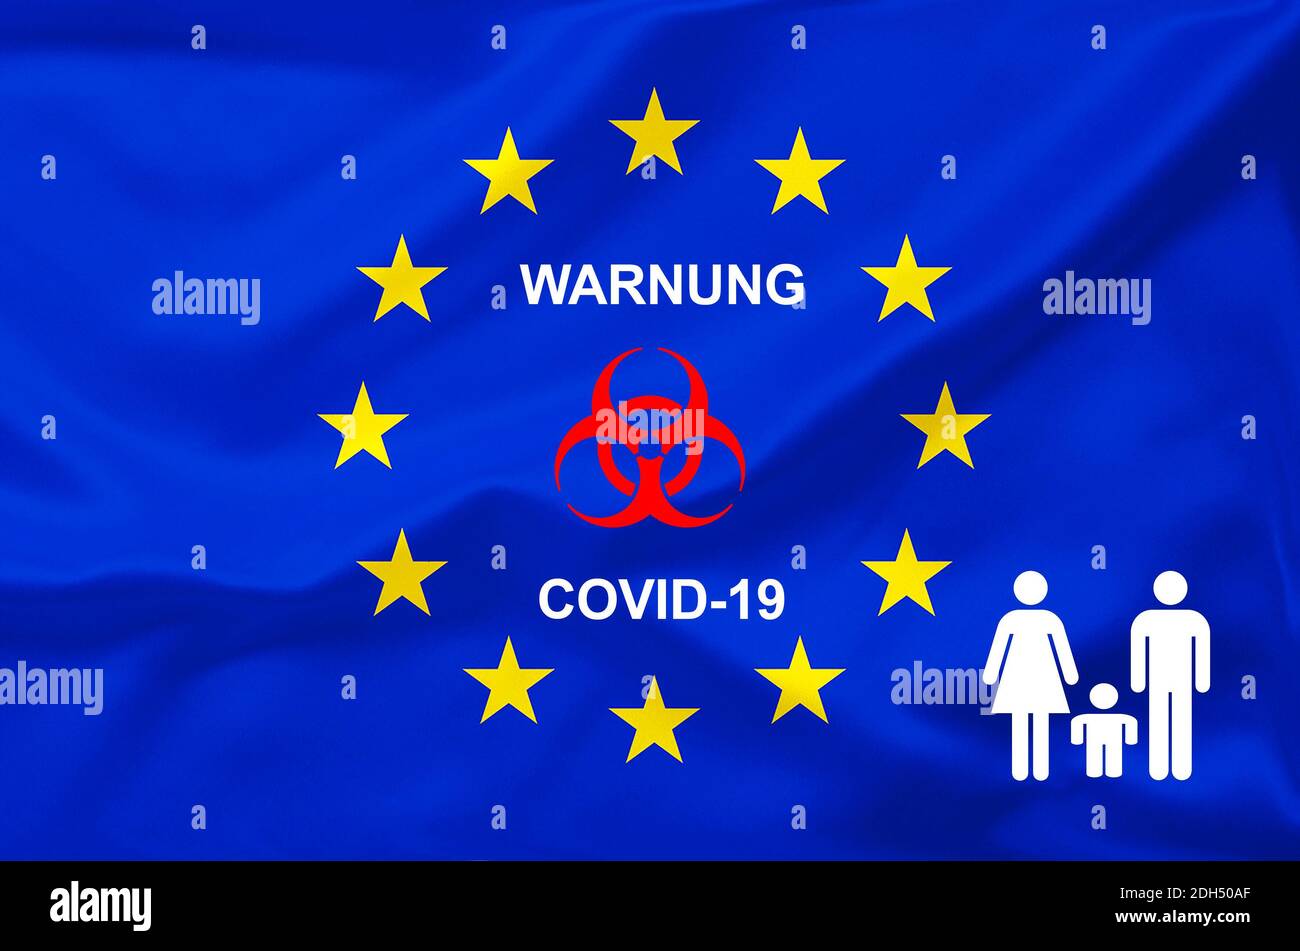 Euroflagge, Flagge, EU-Fahne,  Eurostars, Biohazard, Corona, Coronavirus, Warnung, Abstand halten, 2 Meter Abstand, Stock Photo